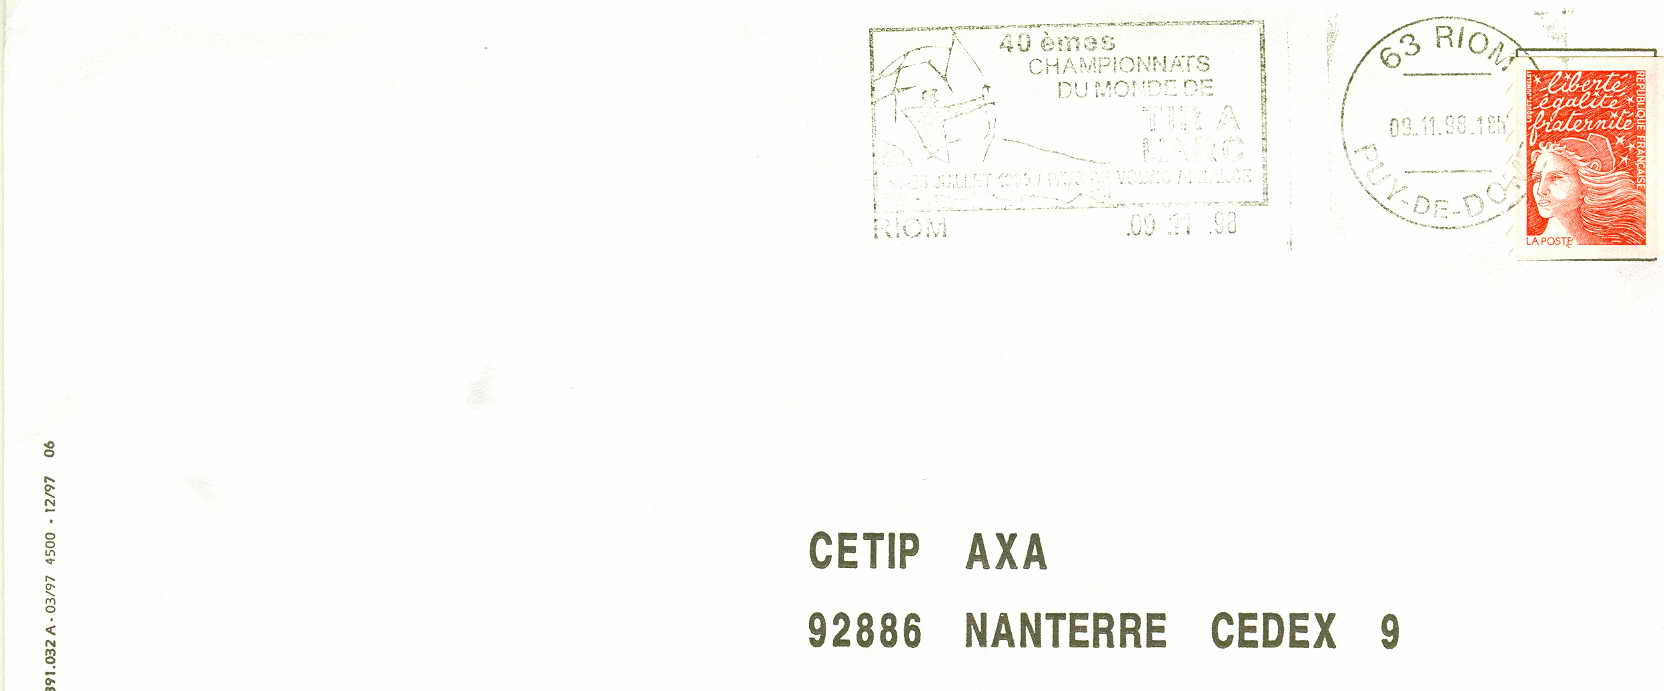 FRANCE OBLITERATION TEMPORAIRE  1998 RIOM CHAMPIONNAT MONDE TIR ARC - Tir à L'Arc